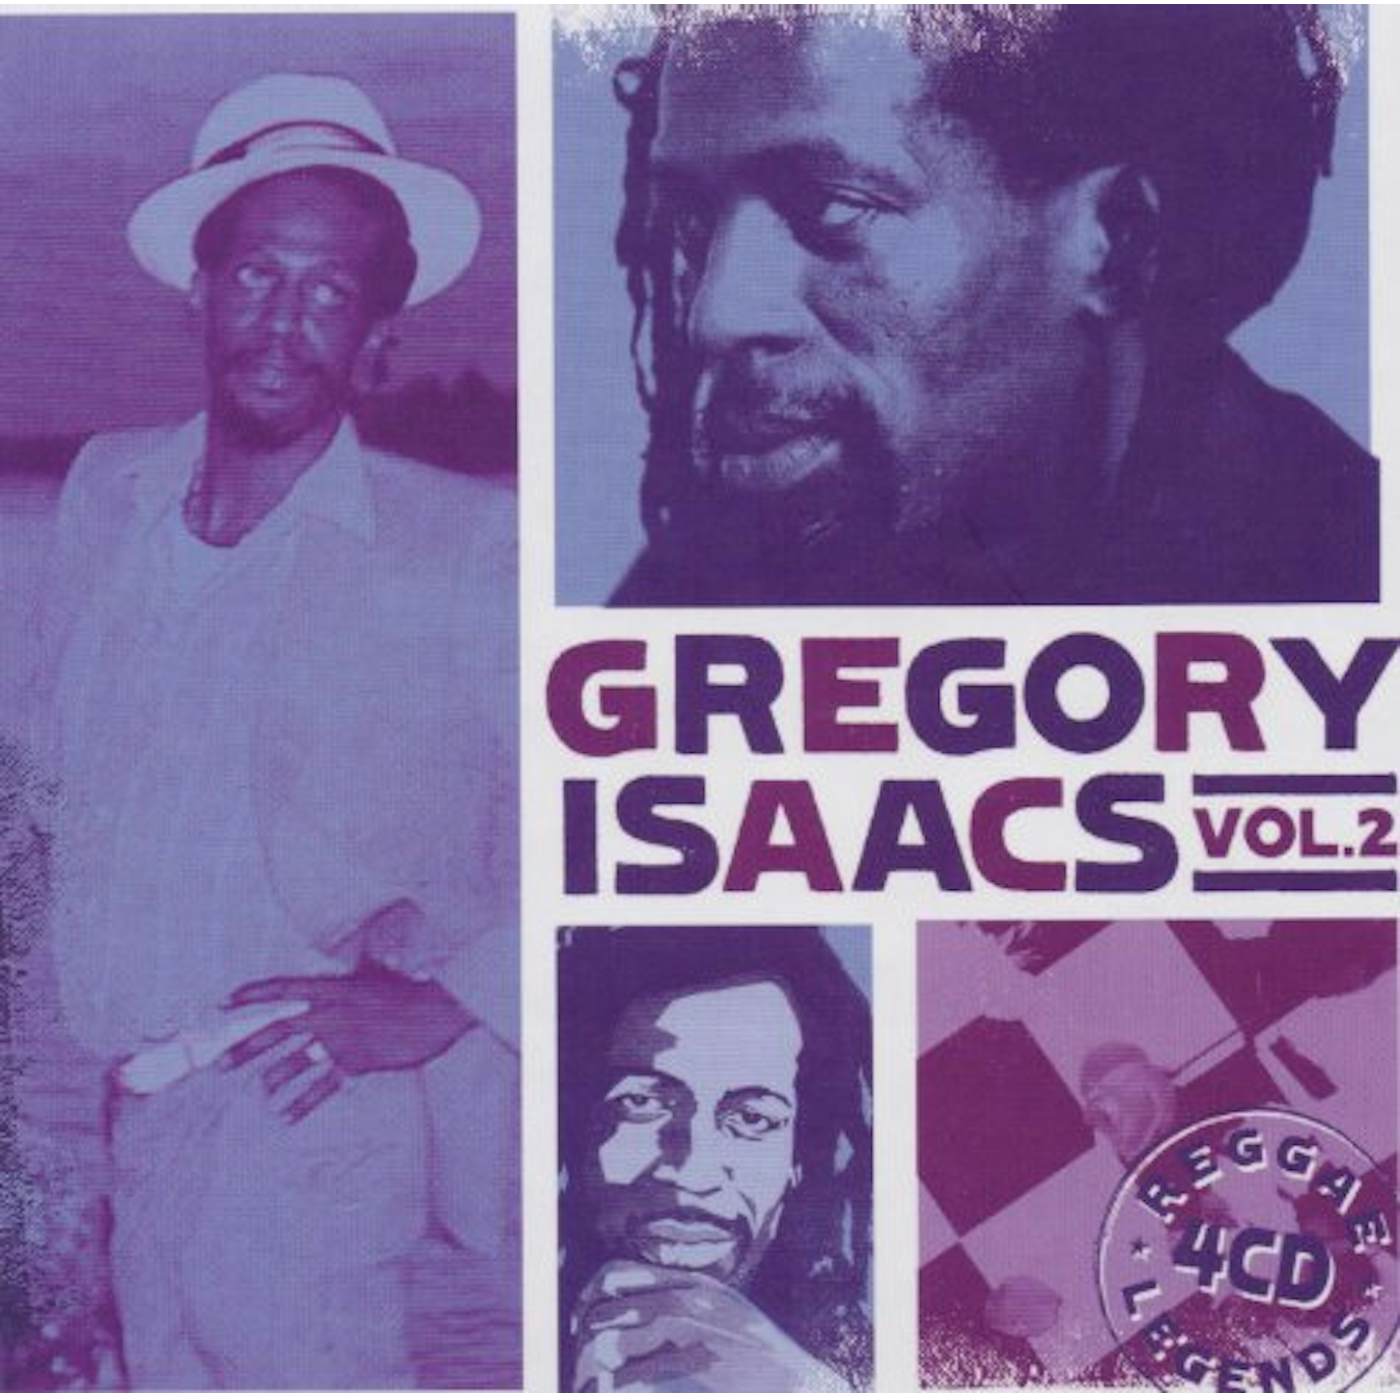 Gregory Isaacs REGGAE LEGENDS 2 CD